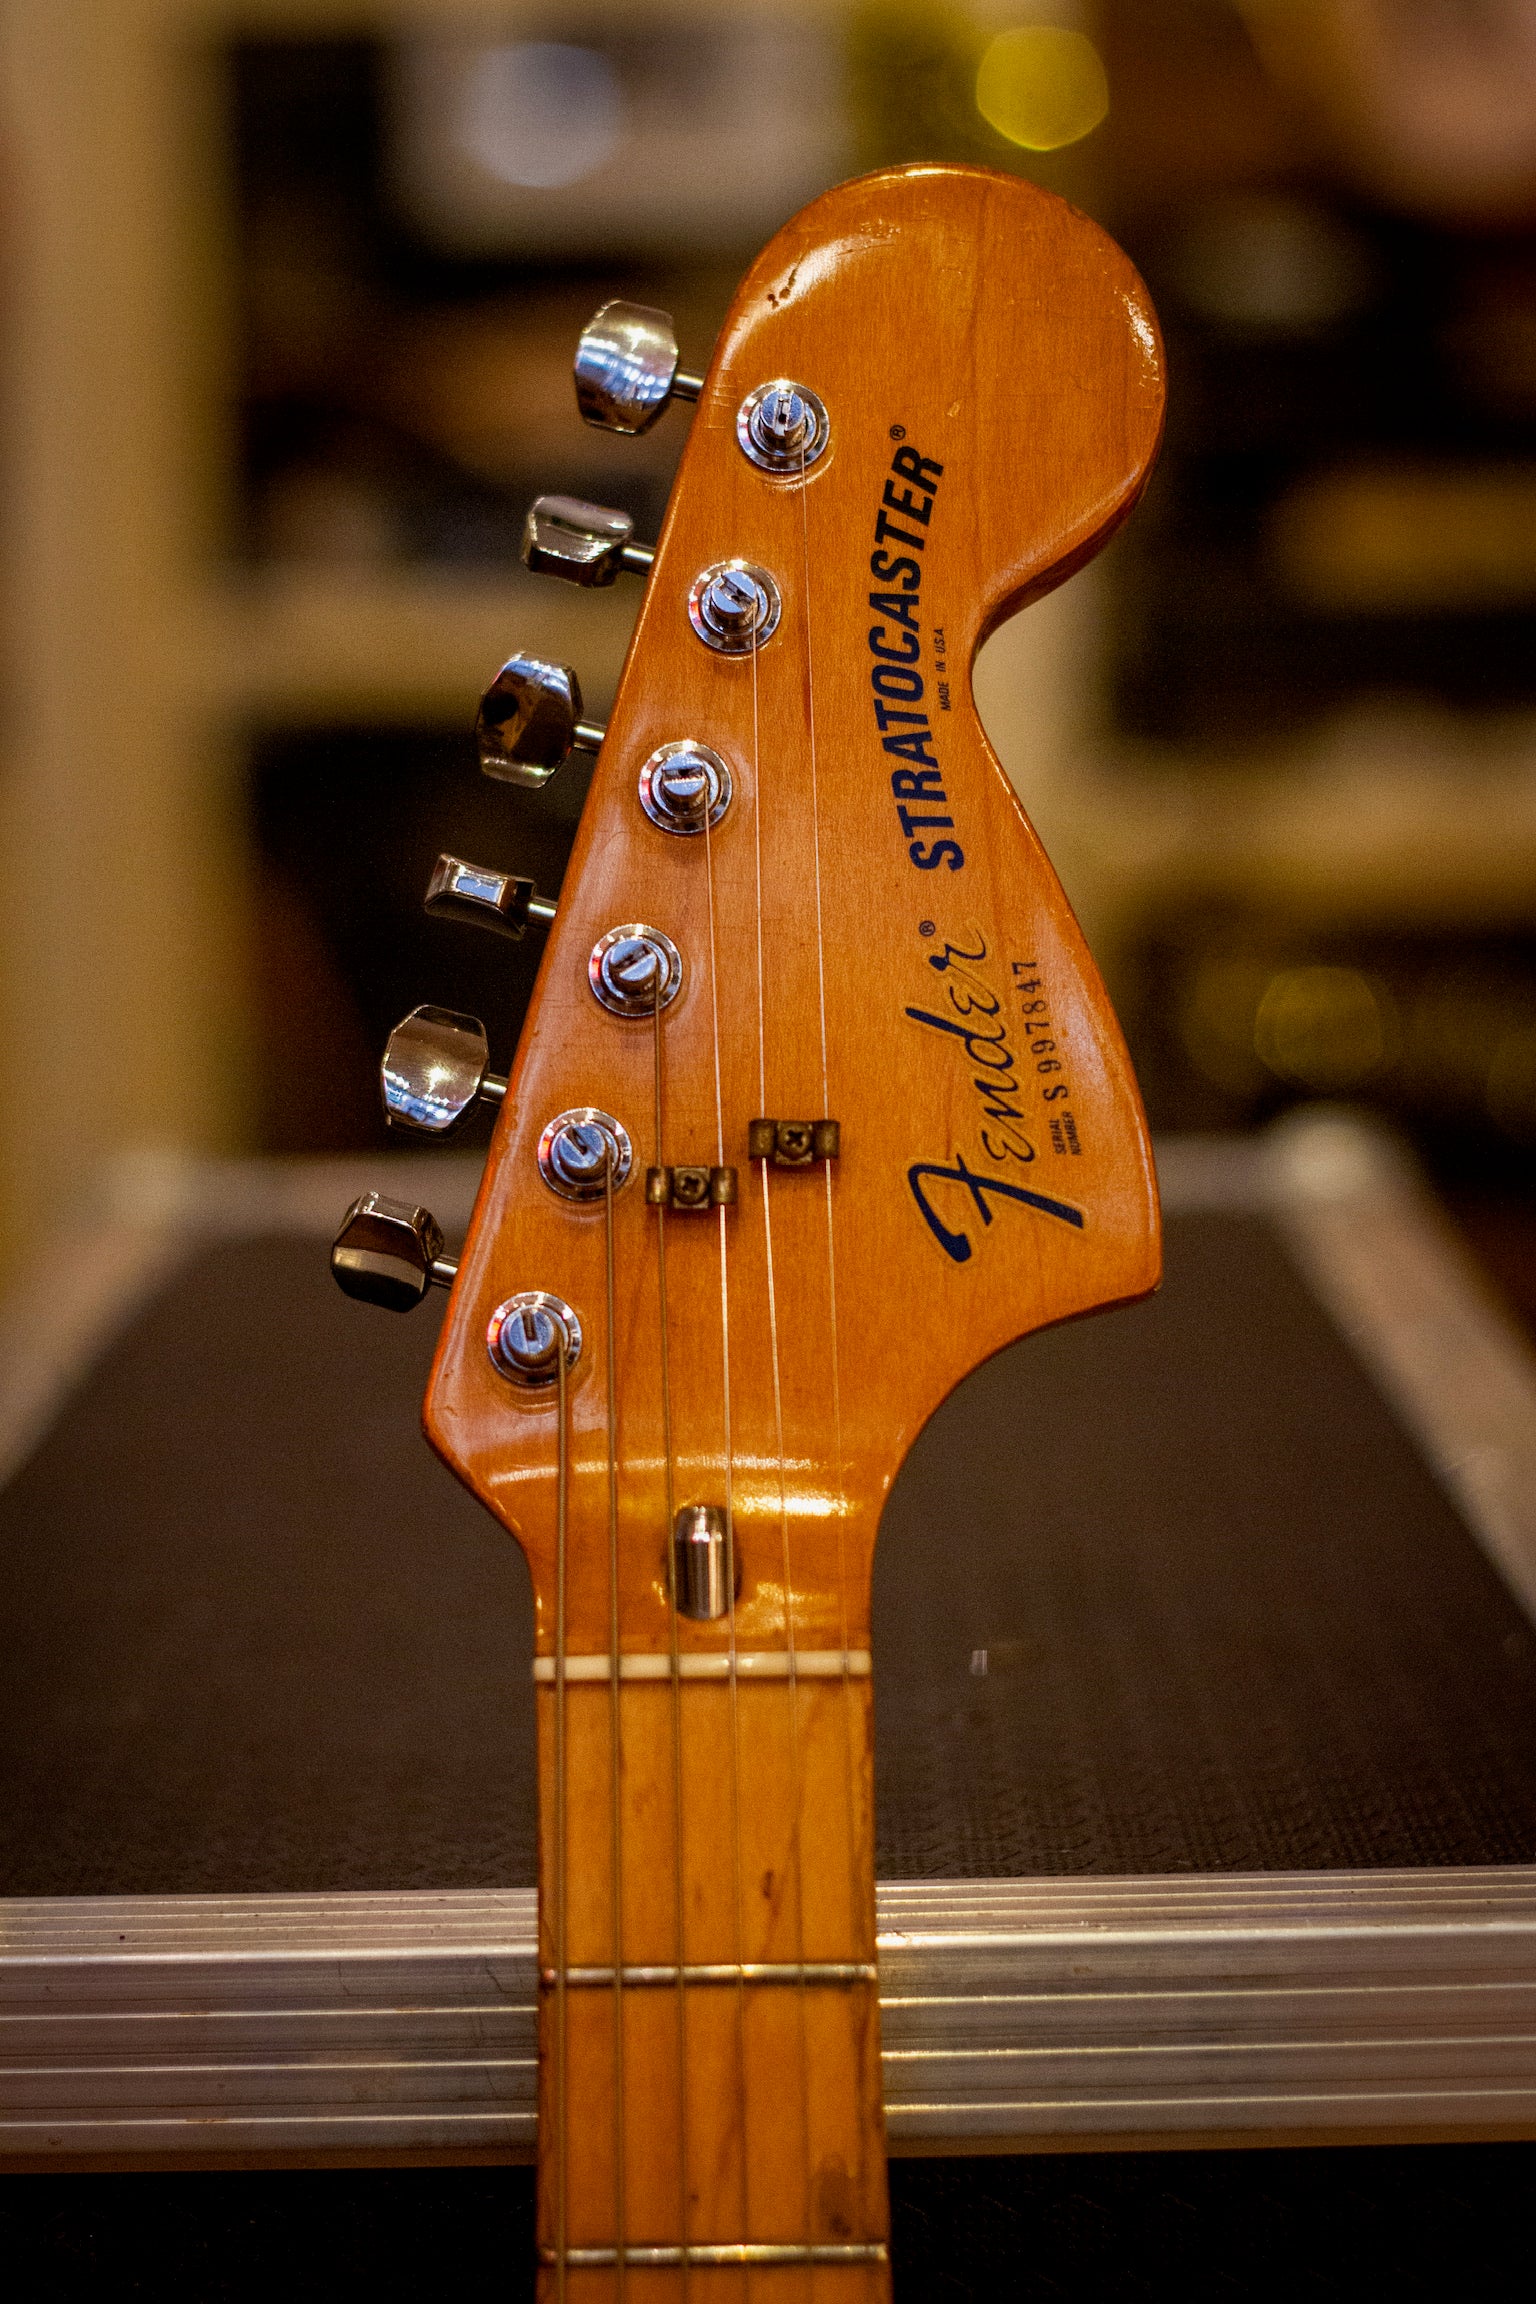 Fender Hard Tail Stratocaster 1980/1 Second Hand - Regent Sounds